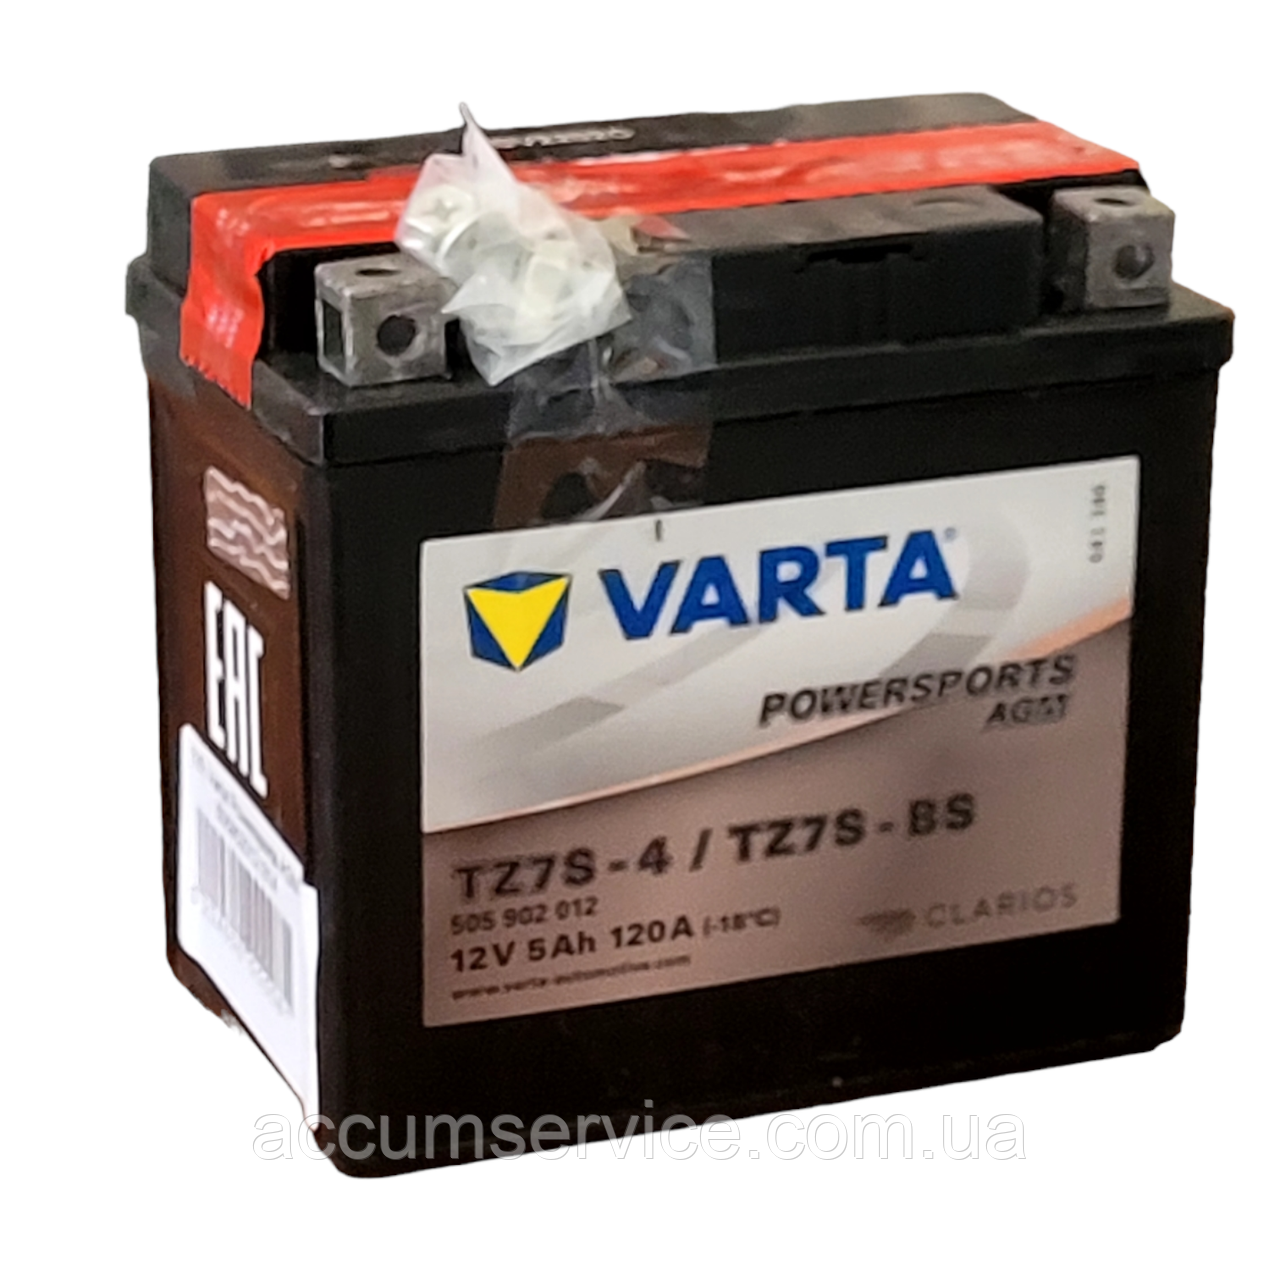 Акумулятор Varta Powersports AGM 505902012 I314